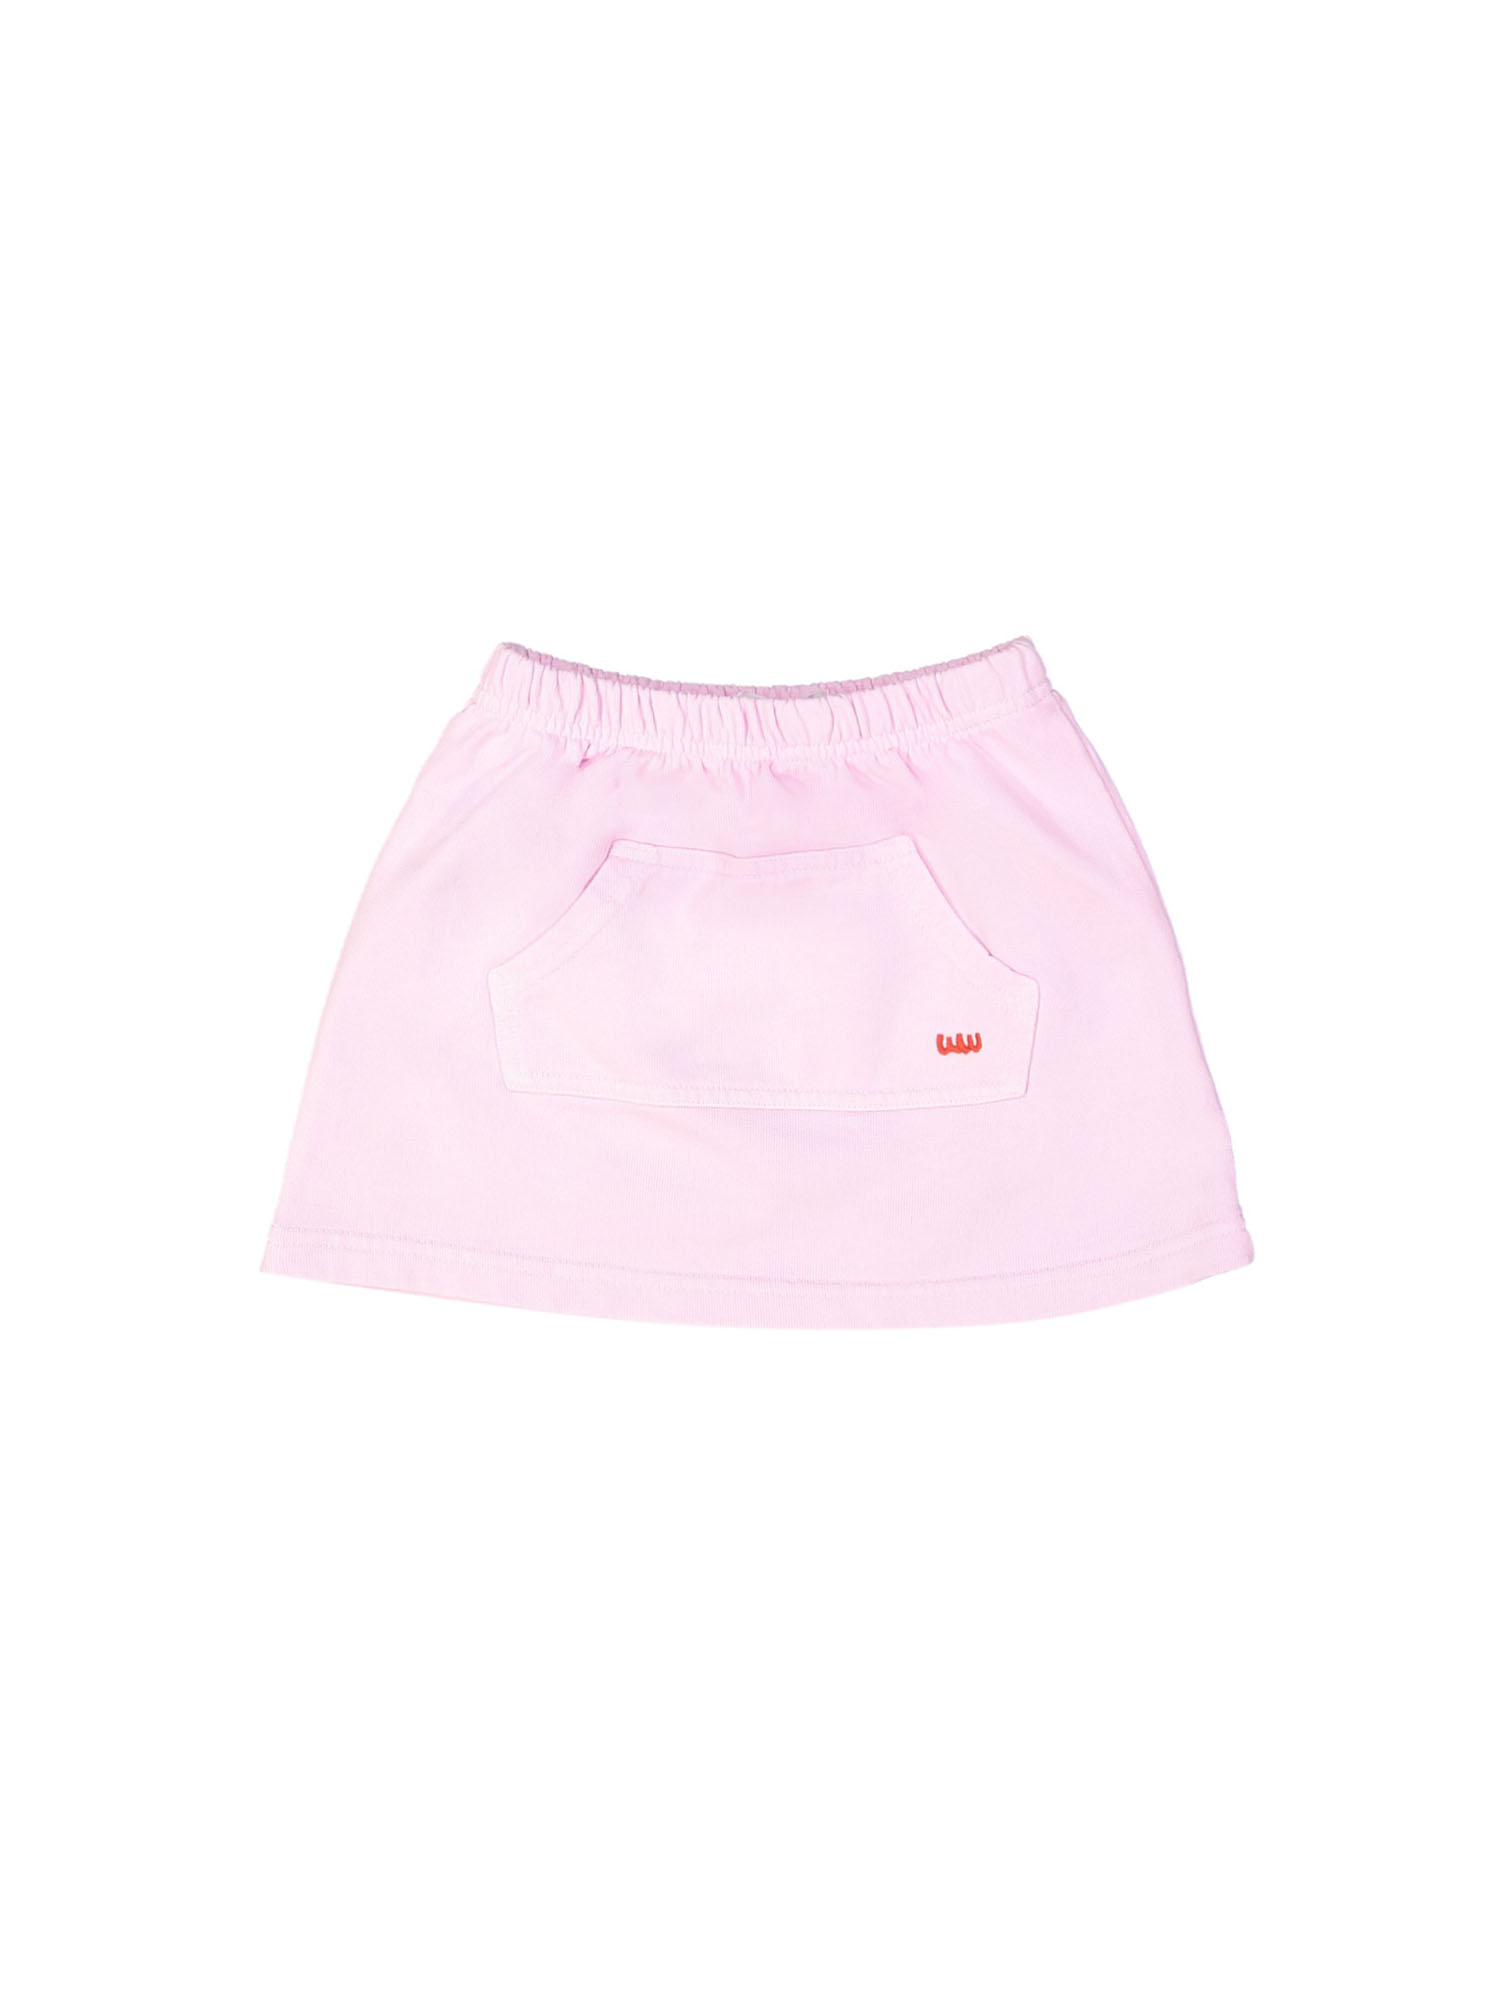 skirt bright pink